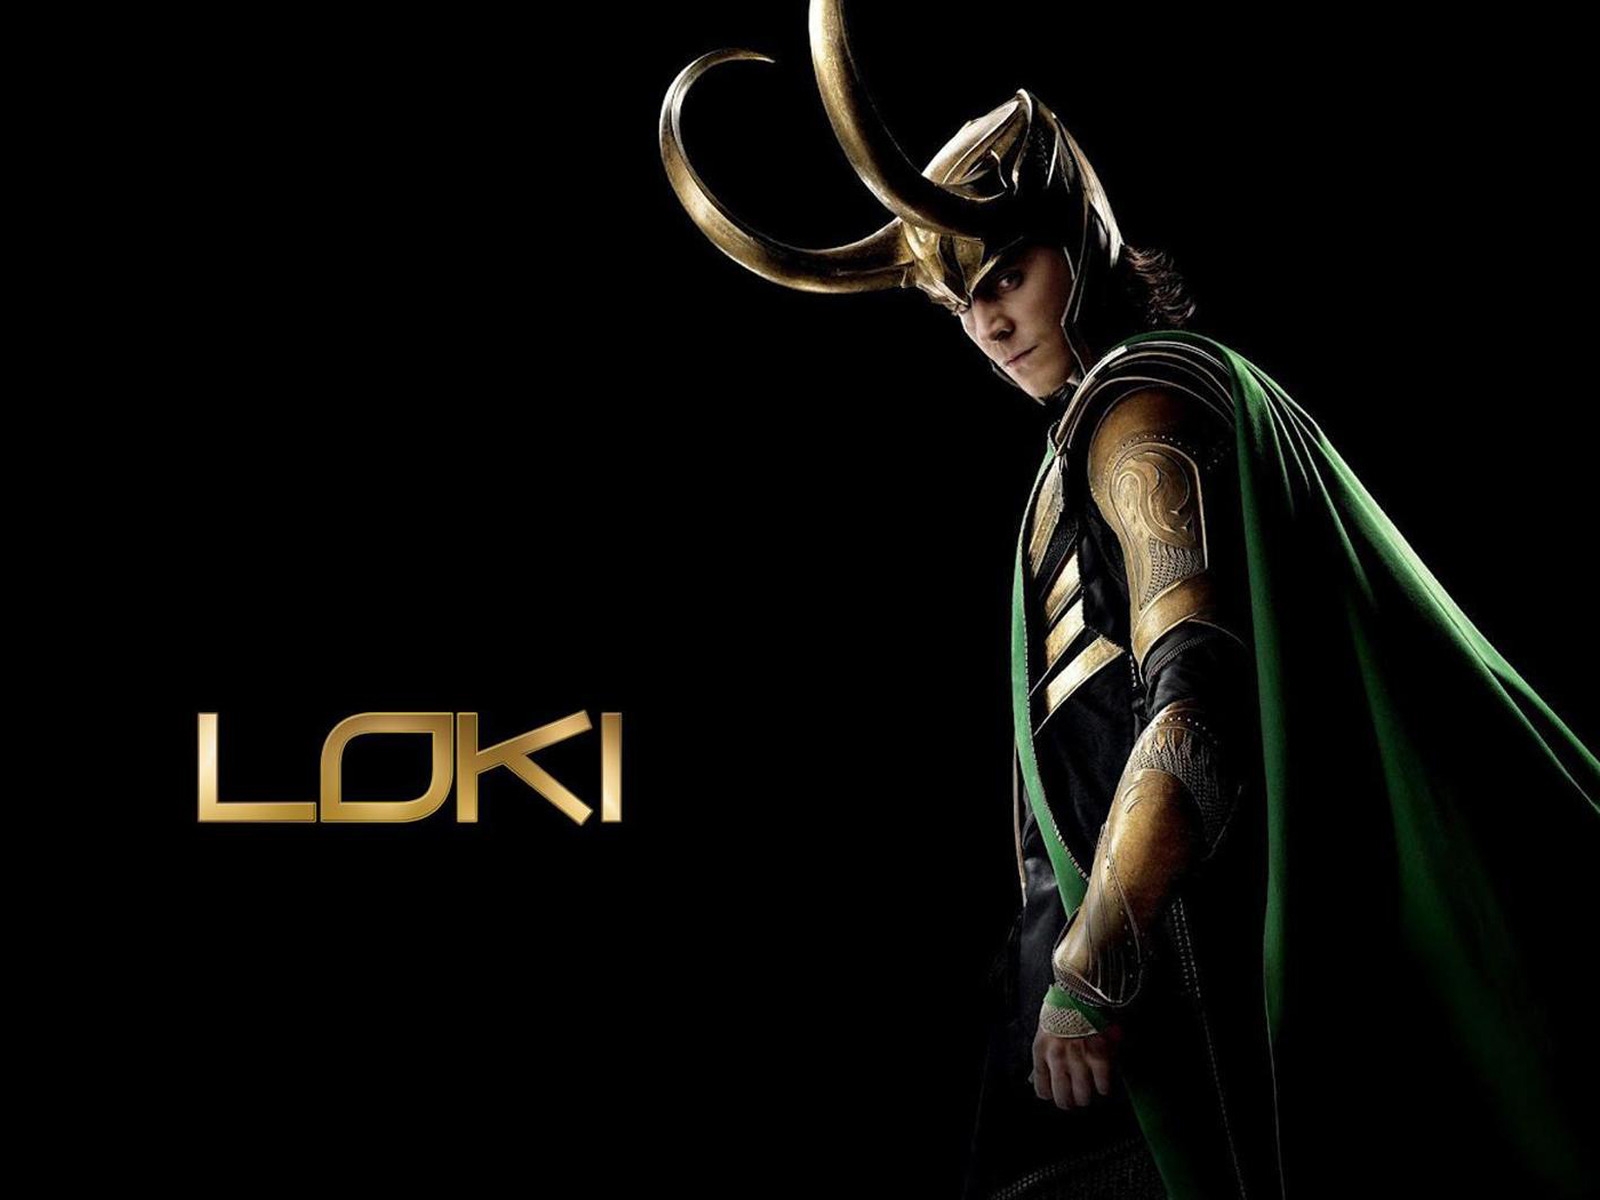 Loki for 1600 x 1200 resolution